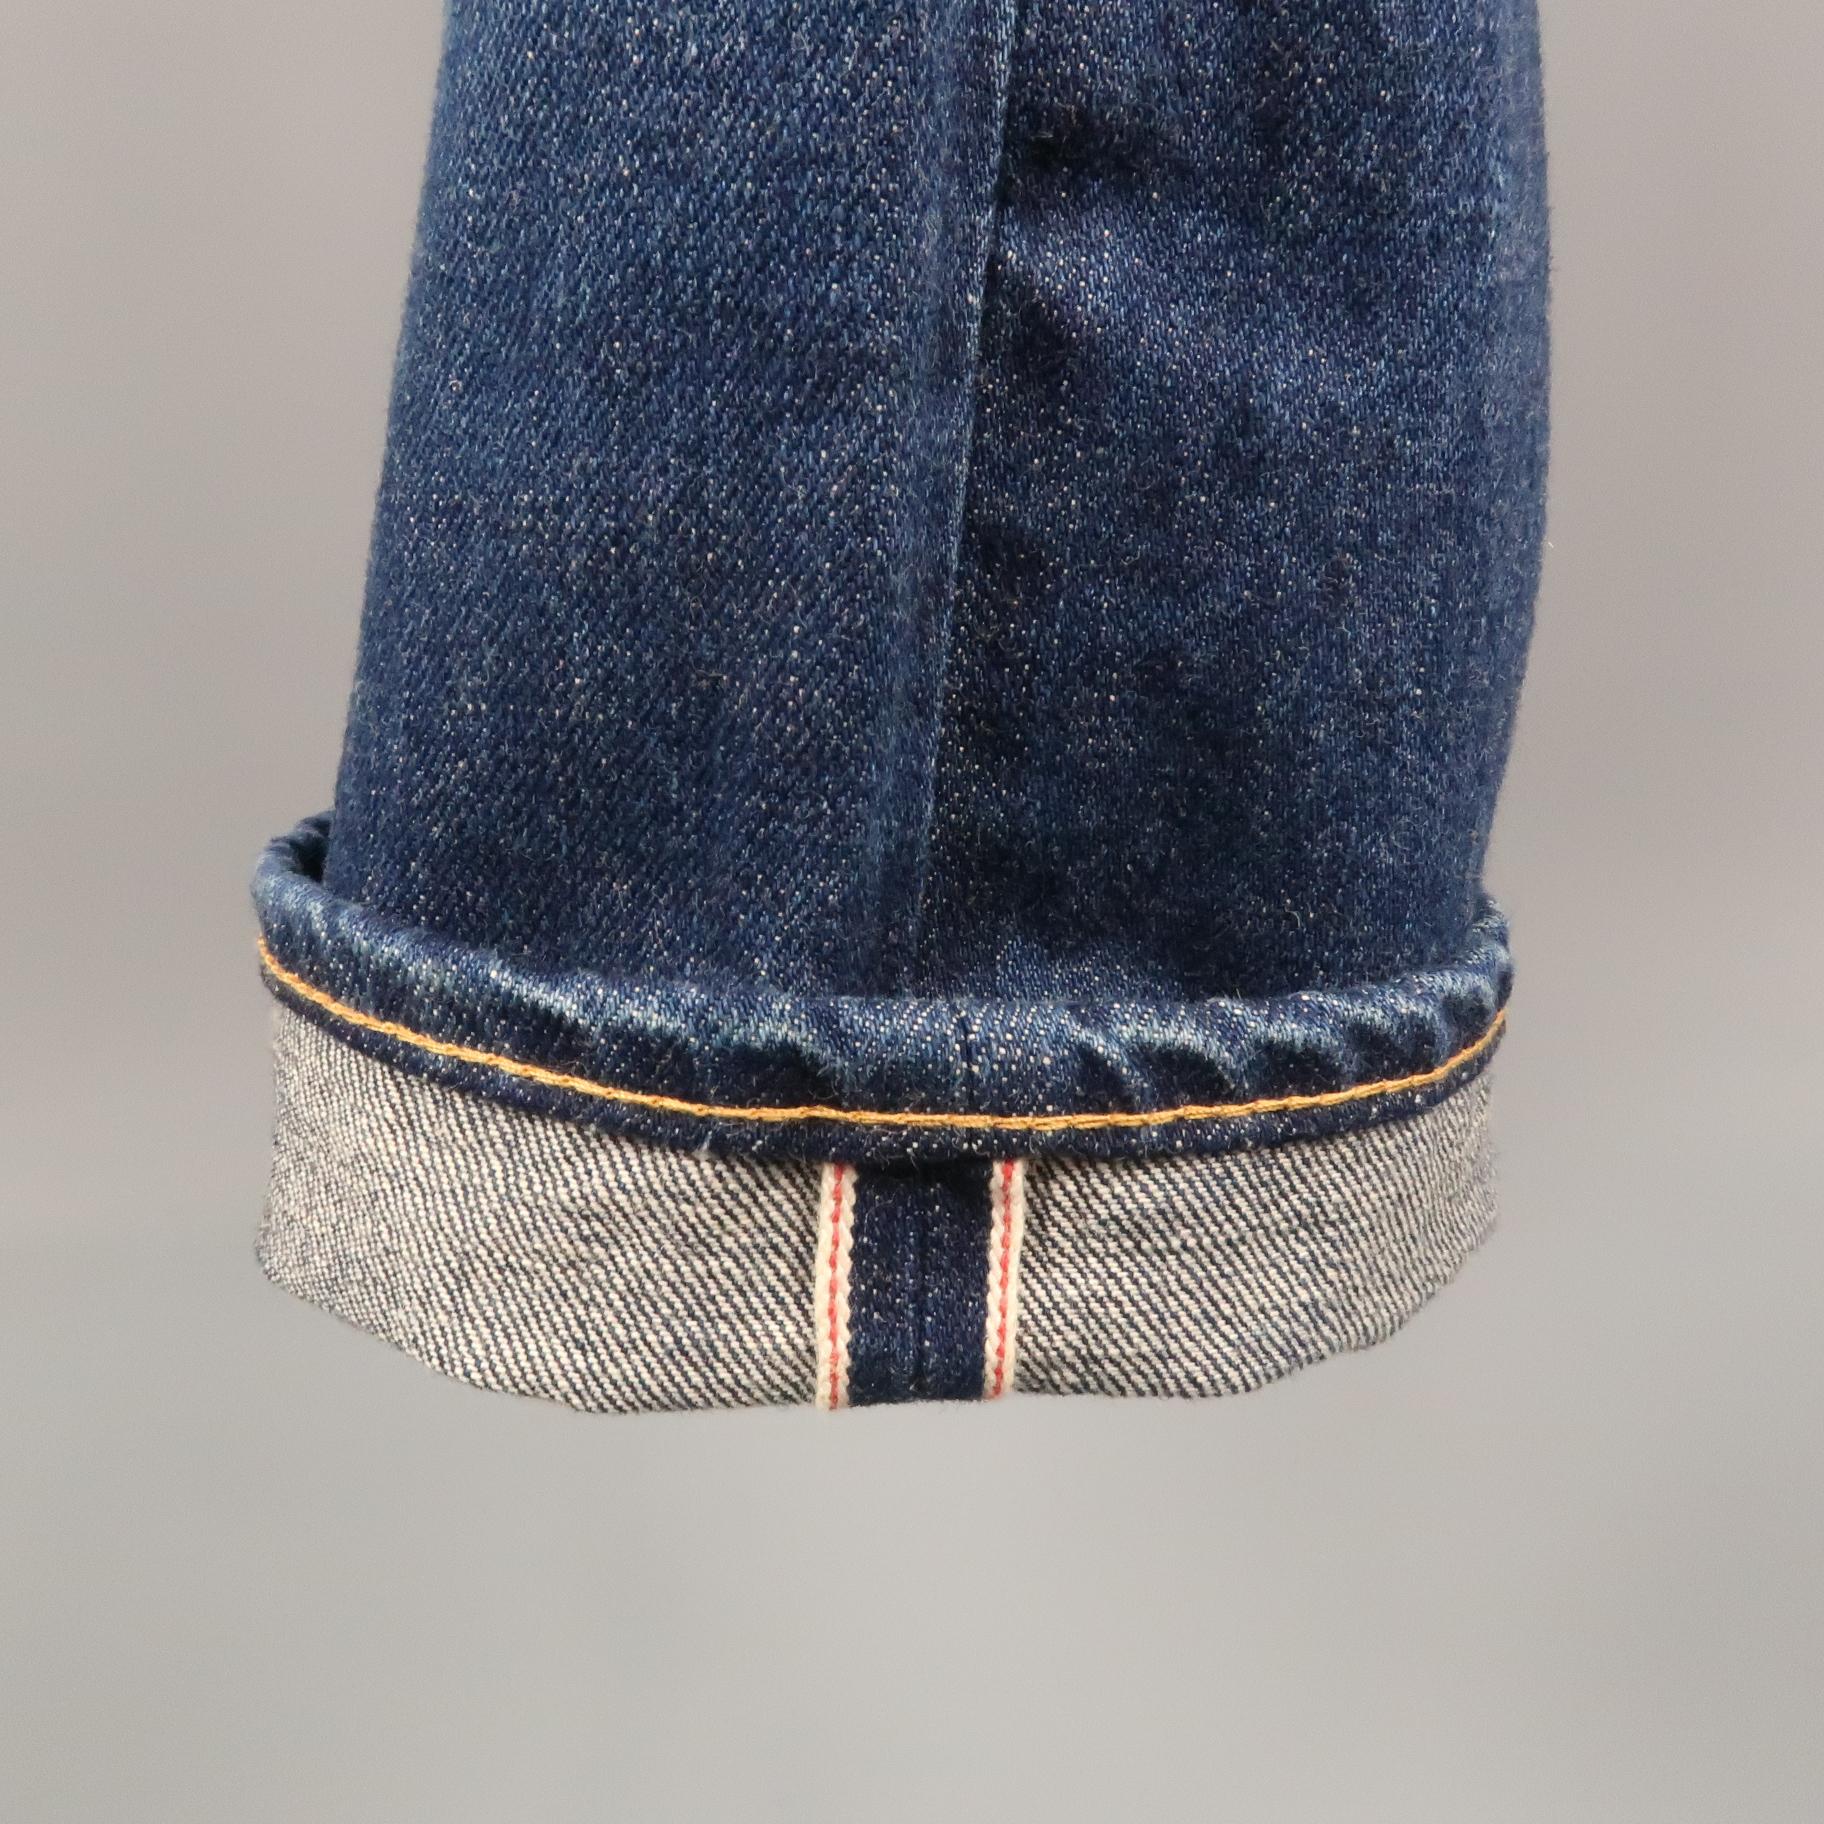 Men's JUNYA WATANABE Size M Indigo Patchwork Selvedge Denim Button Fly Jeans